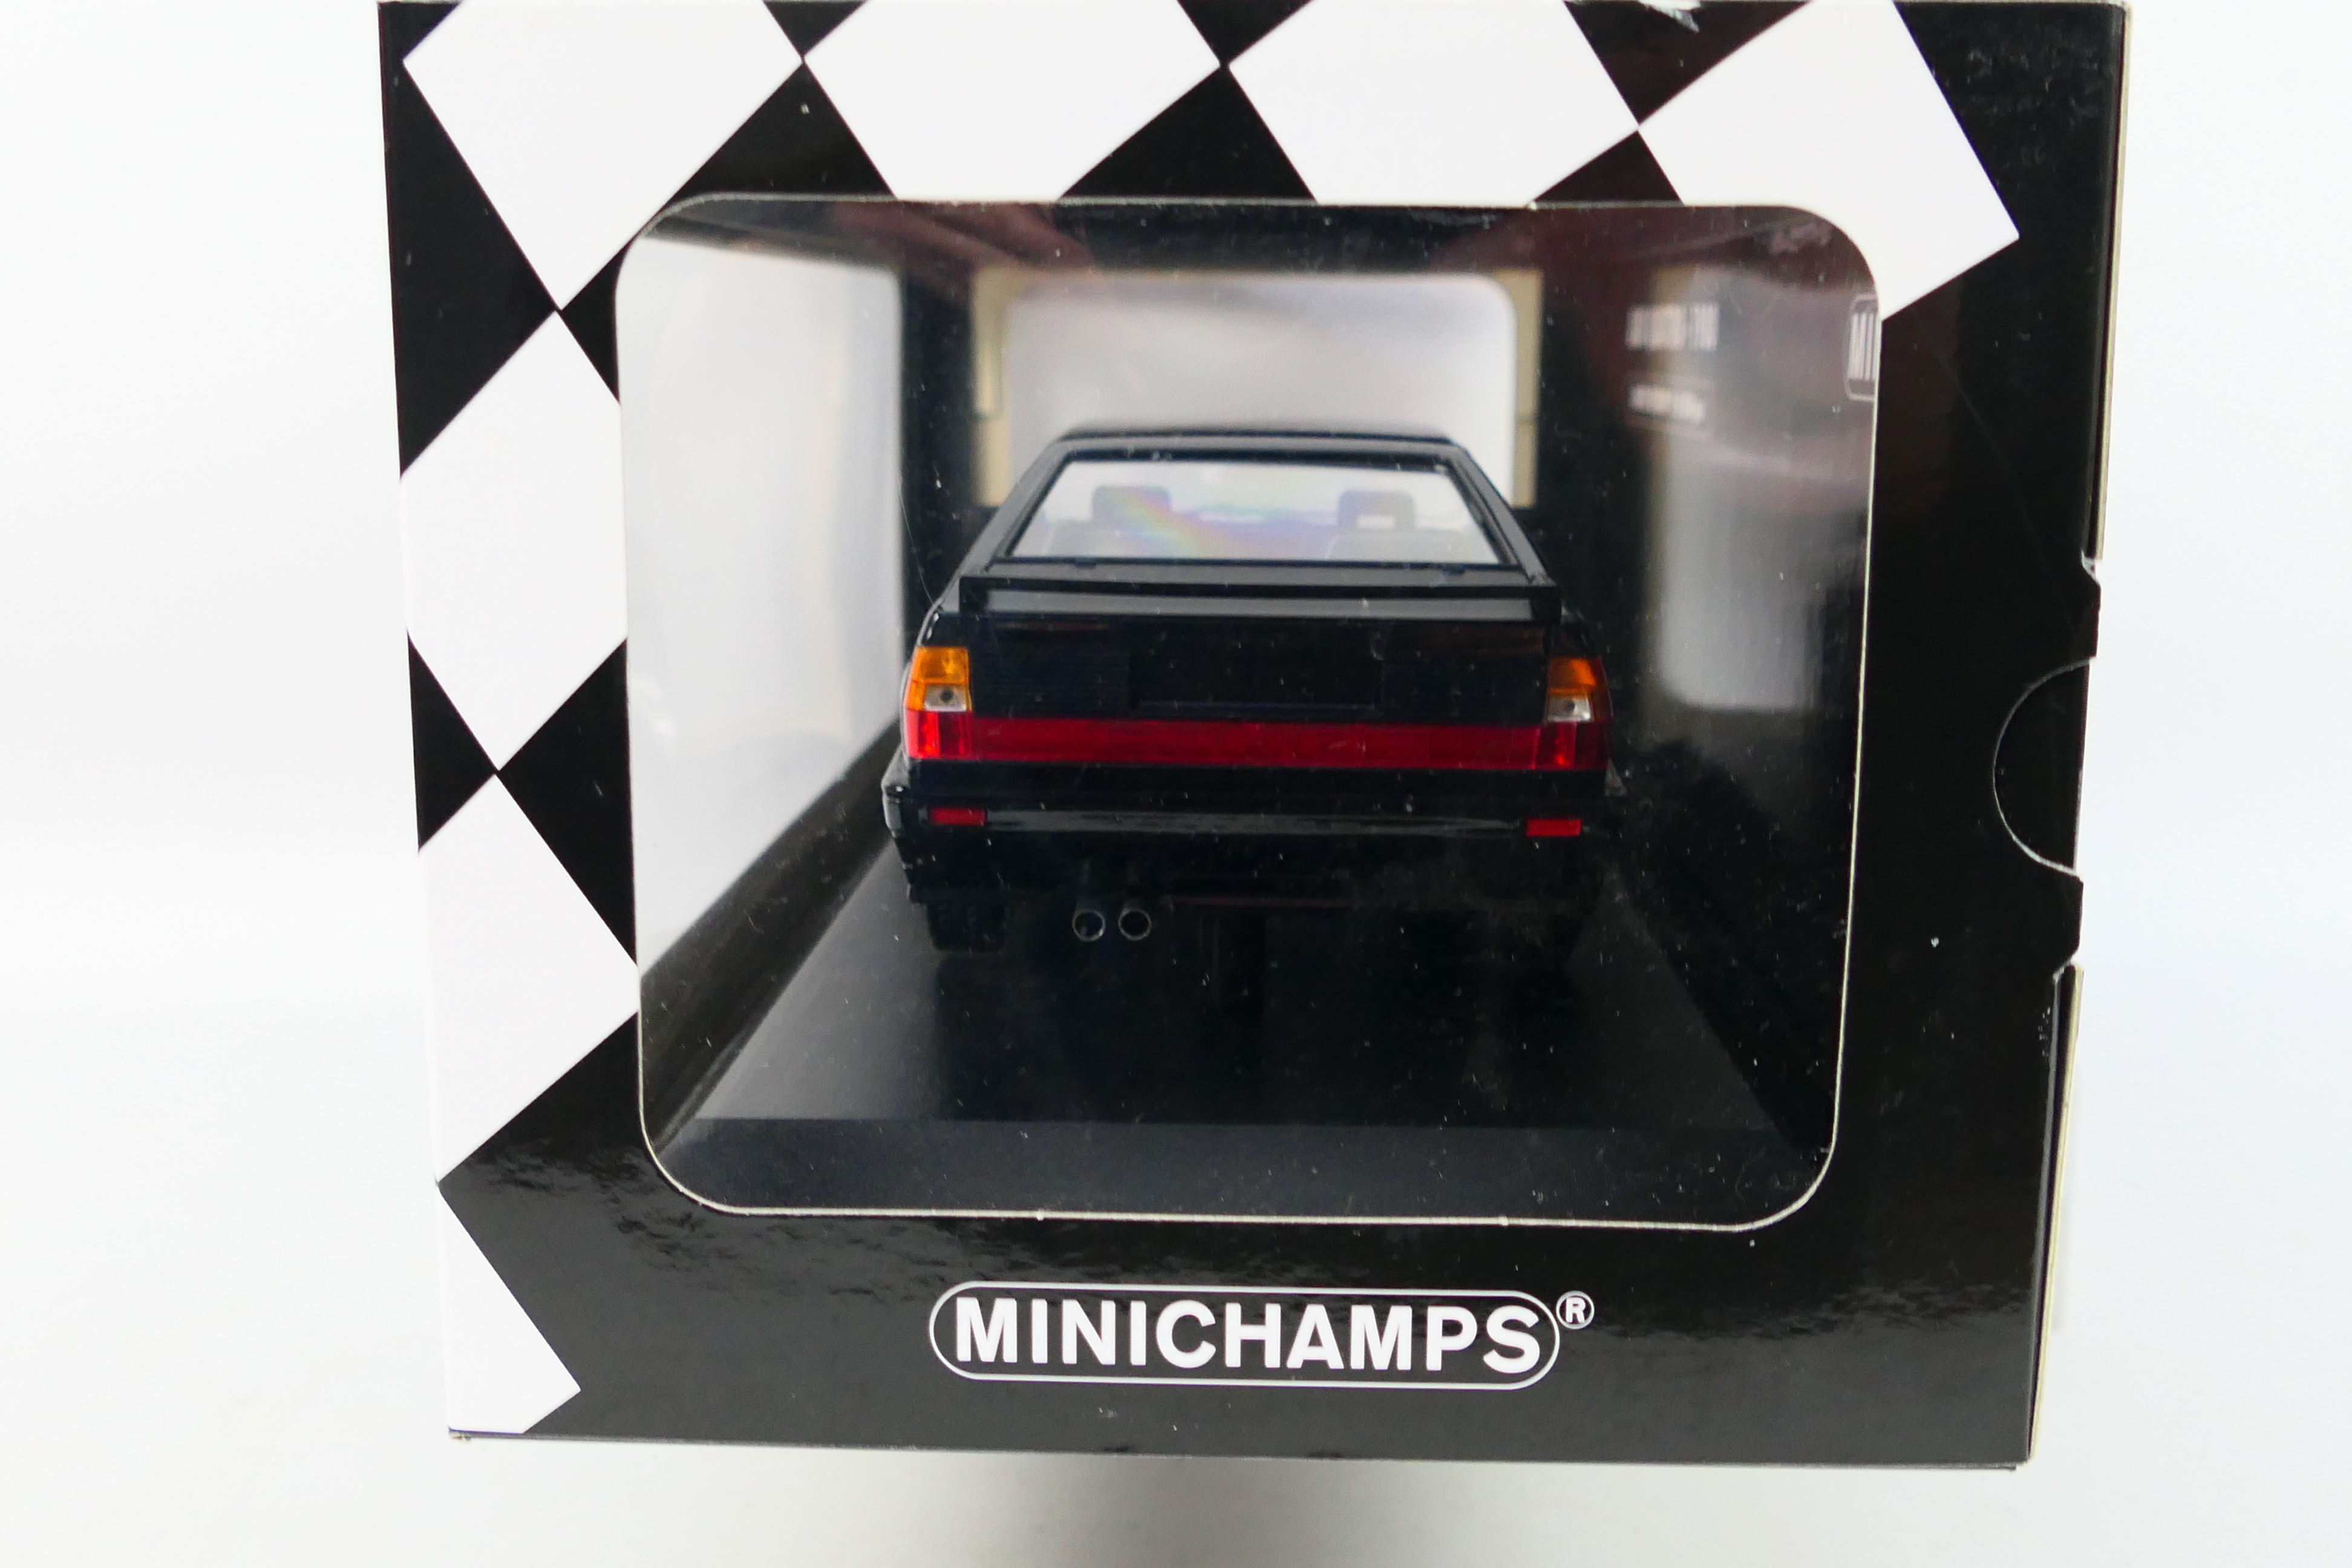 Minichamps - A boxed 1:18 scale Minichamps Limited Edition #155016121 1980 Audi Quattro. - Image 4 of 4